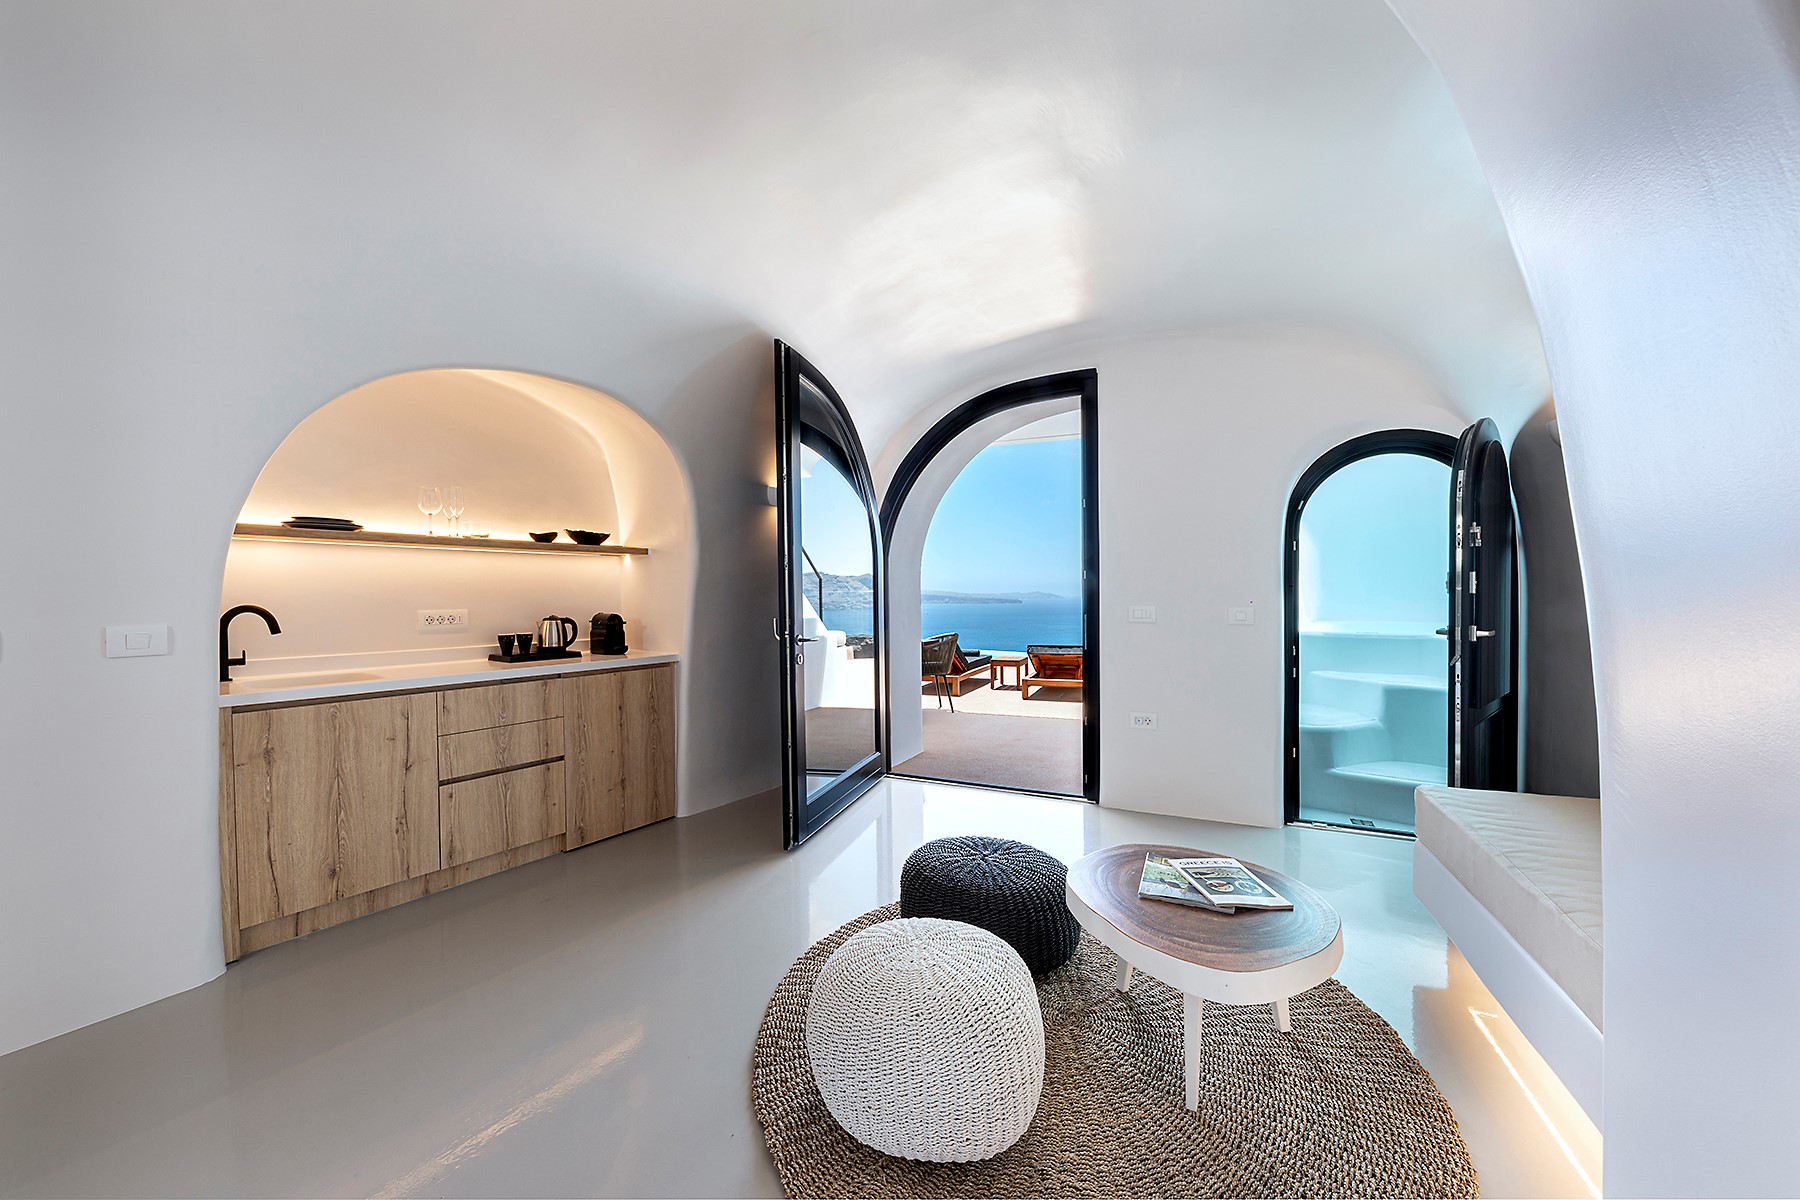 Olvos Luxury Suites - Santorini, Greece